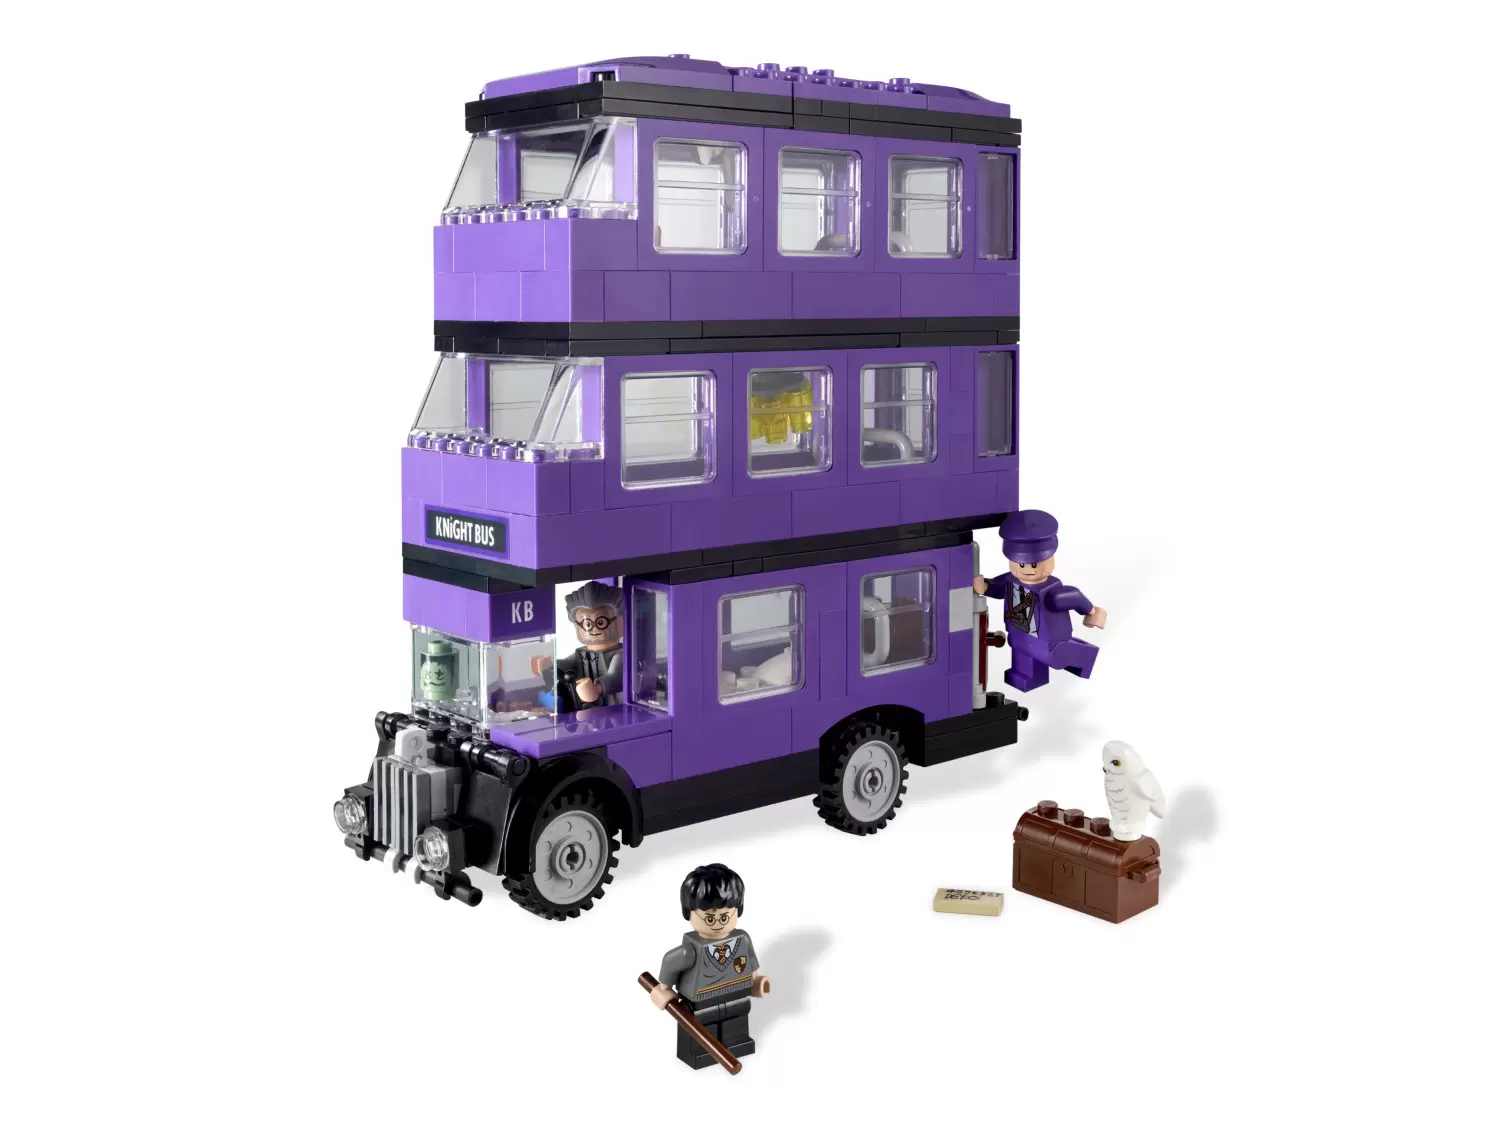 LEGO Harry Potter - The Knight Bus